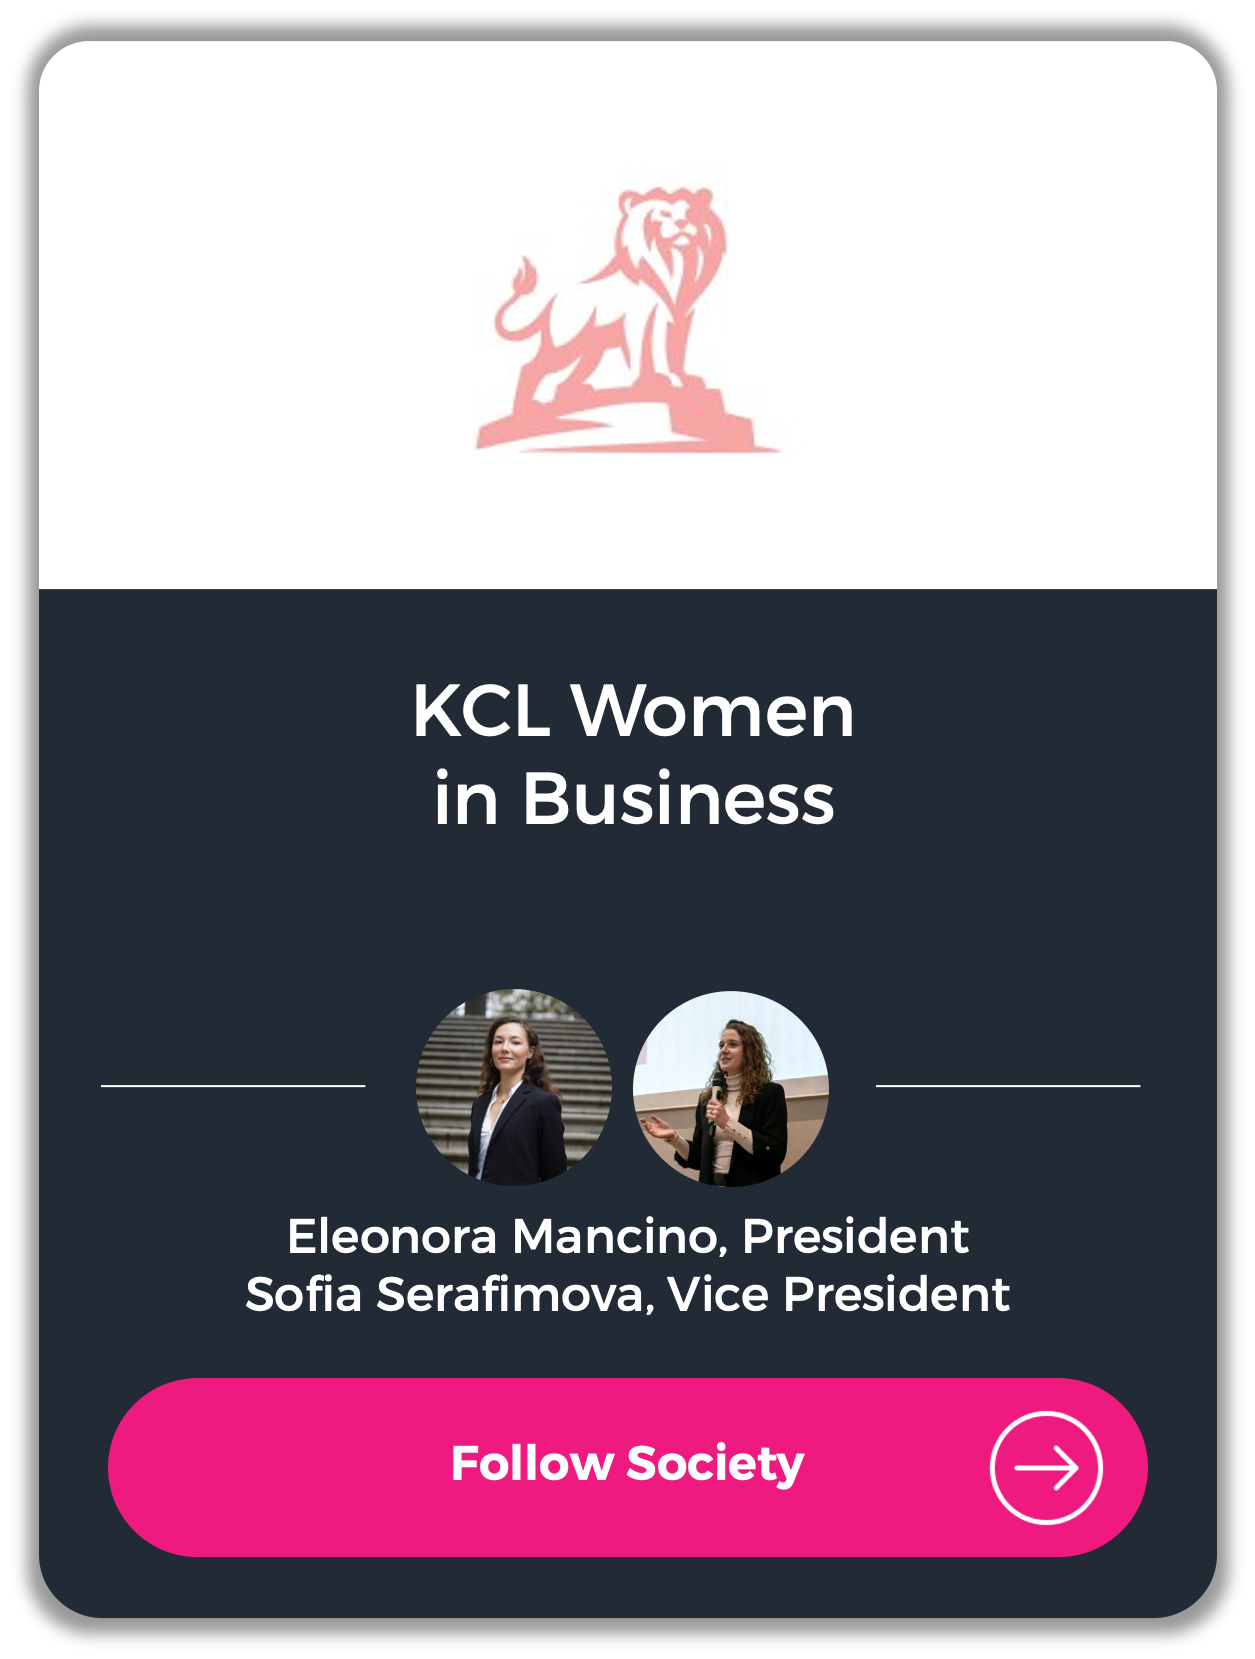 KCL_Women_in_Business_Preside_Event_Windo